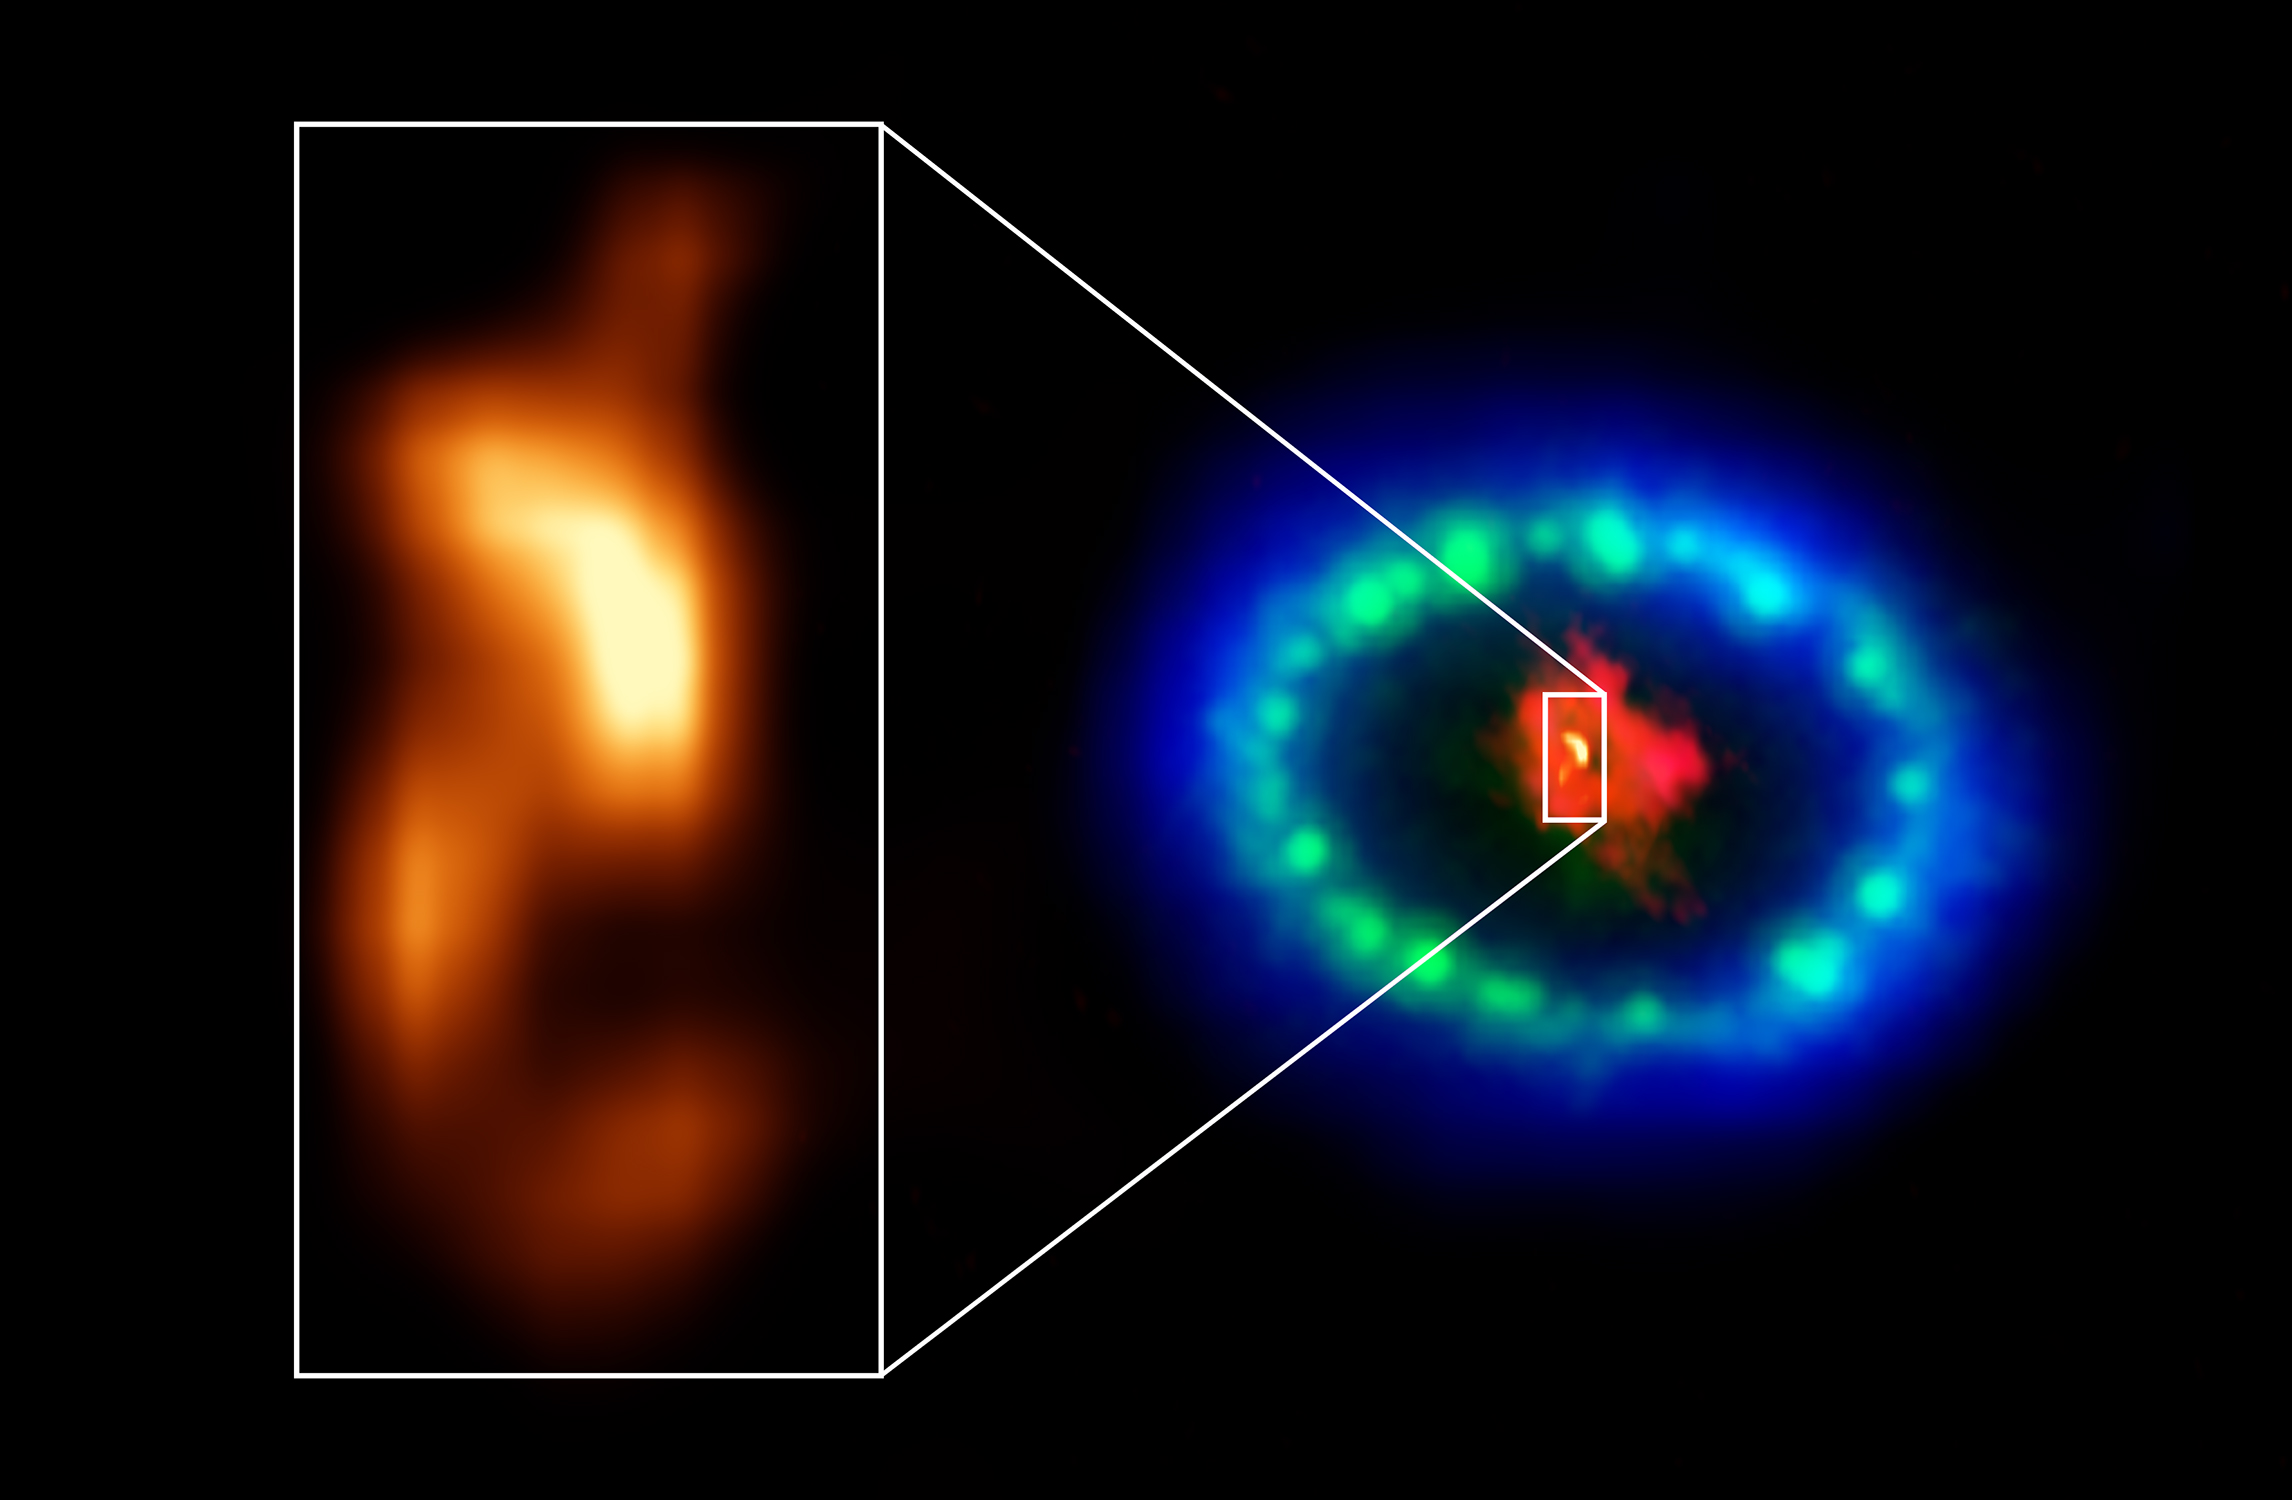 NASA's supermassive black hole was observed using the James Webb Space Telescope (JWST).